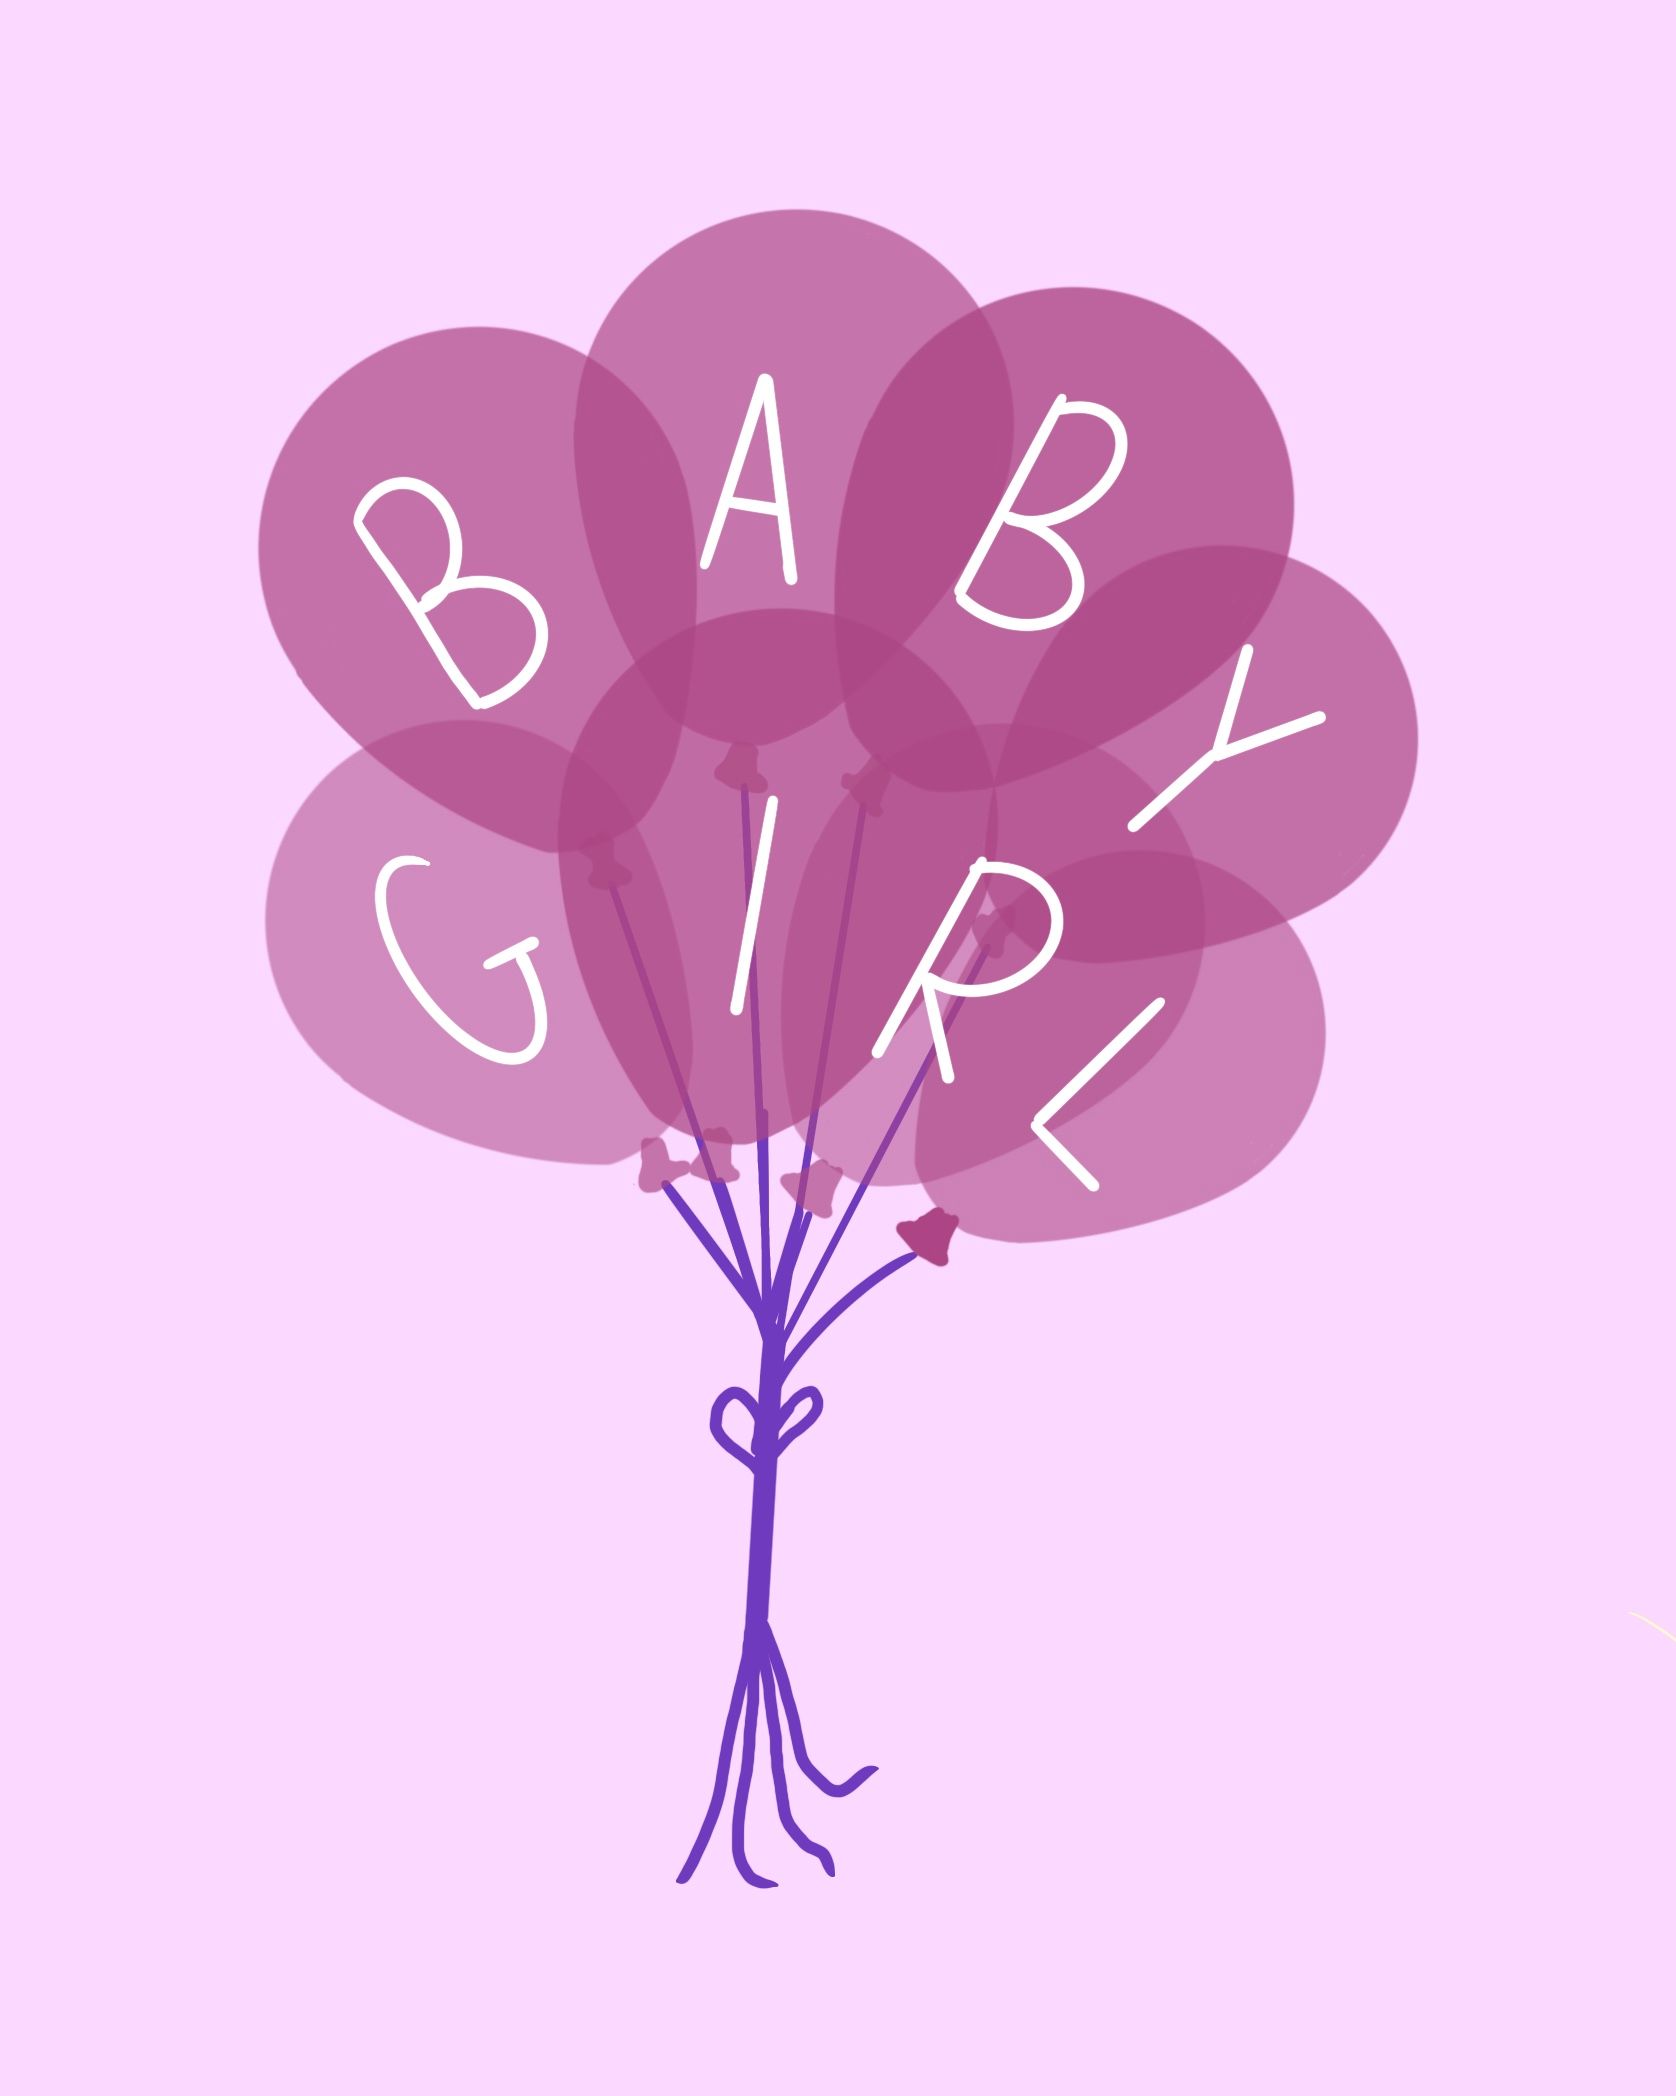 Card design "baby girl"